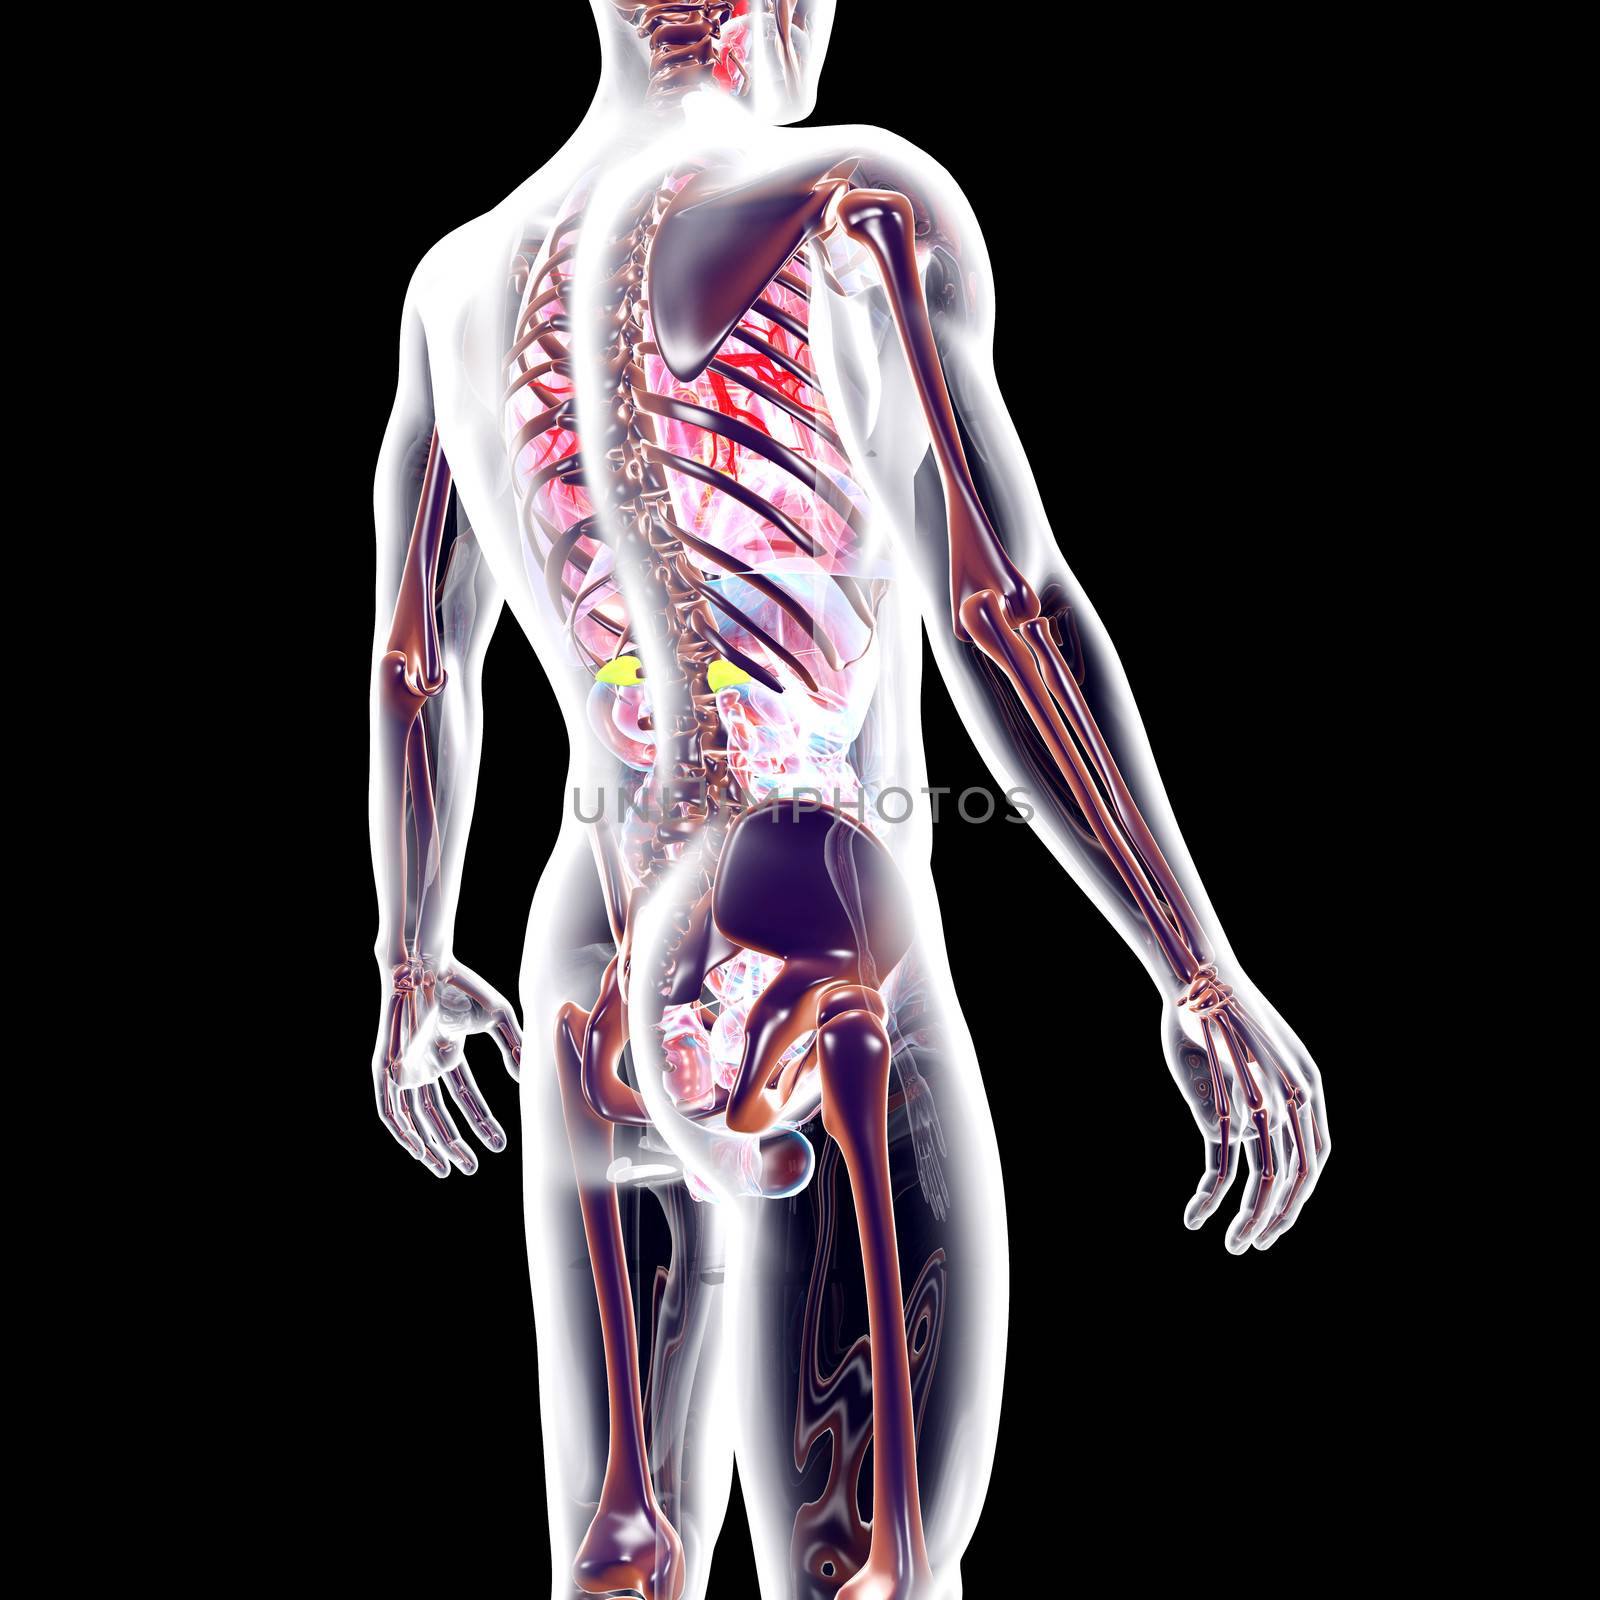 The internal adrenal Organs. 3D rendered anatomical illustration.